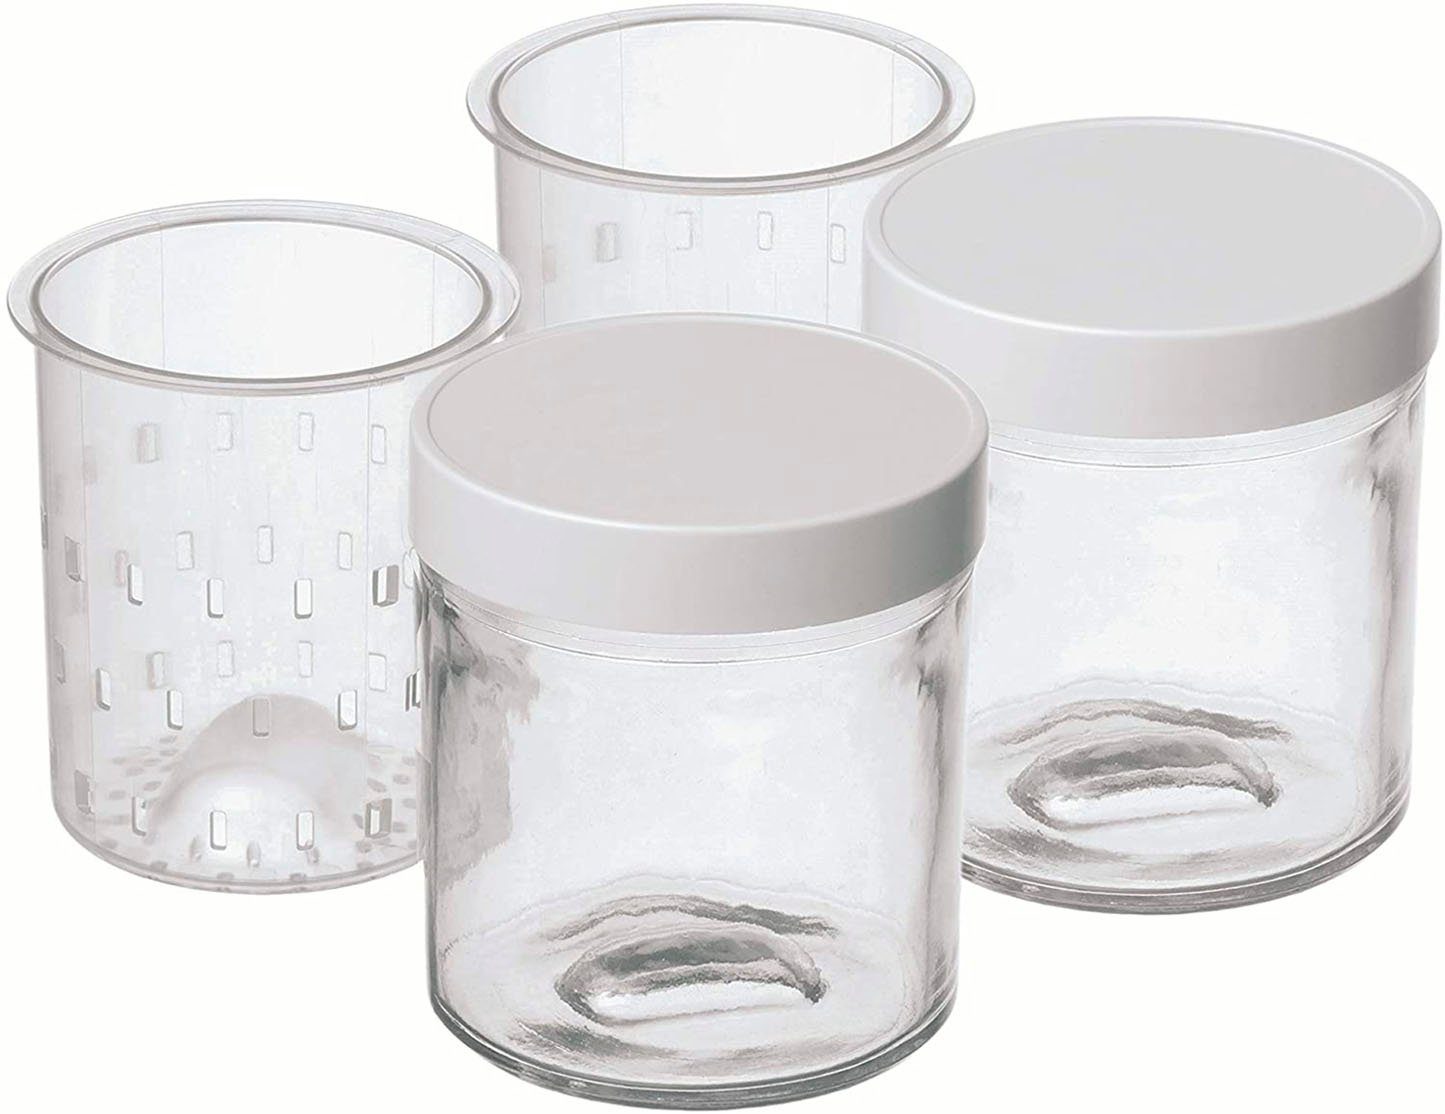 für 2 Joghurtgläser Zubereiter Joghurt (Set, Stk. Cuisinart Glas, YM402E, Kunststoff, 2-tlg), aus Plastik,